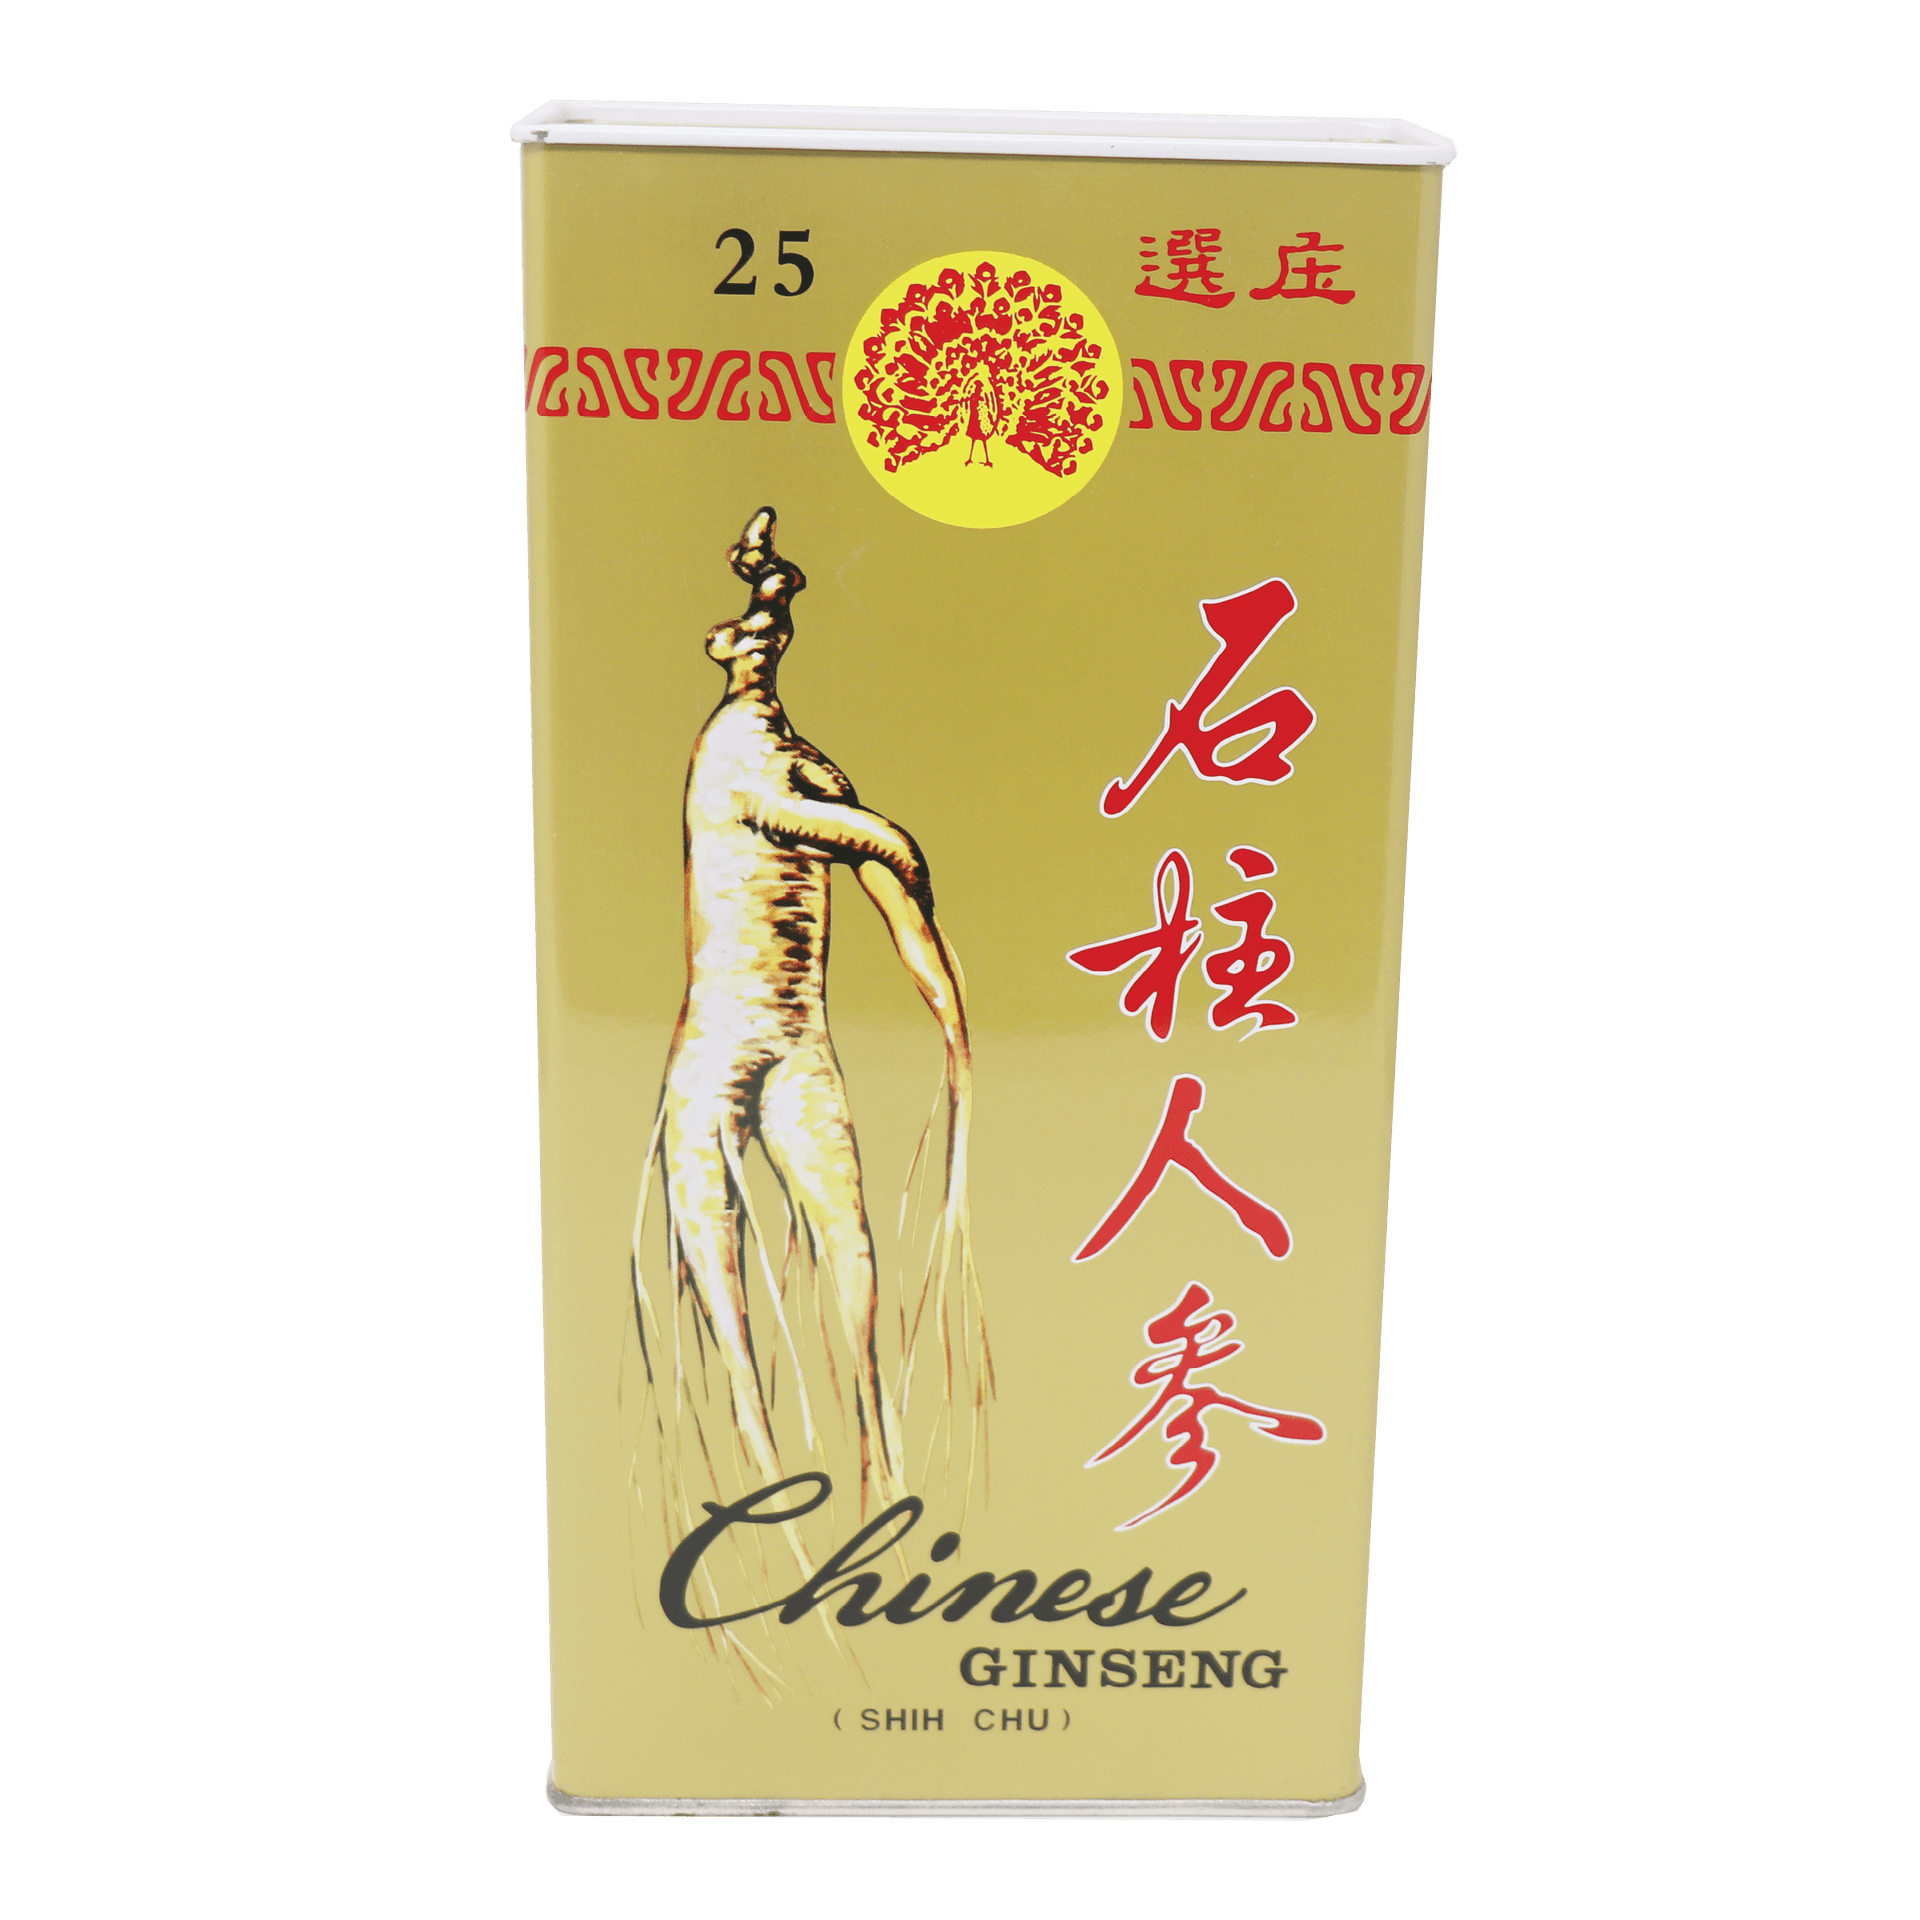 SHIH CHU Chinese GINSENG Medium Size (25pieces/600g)